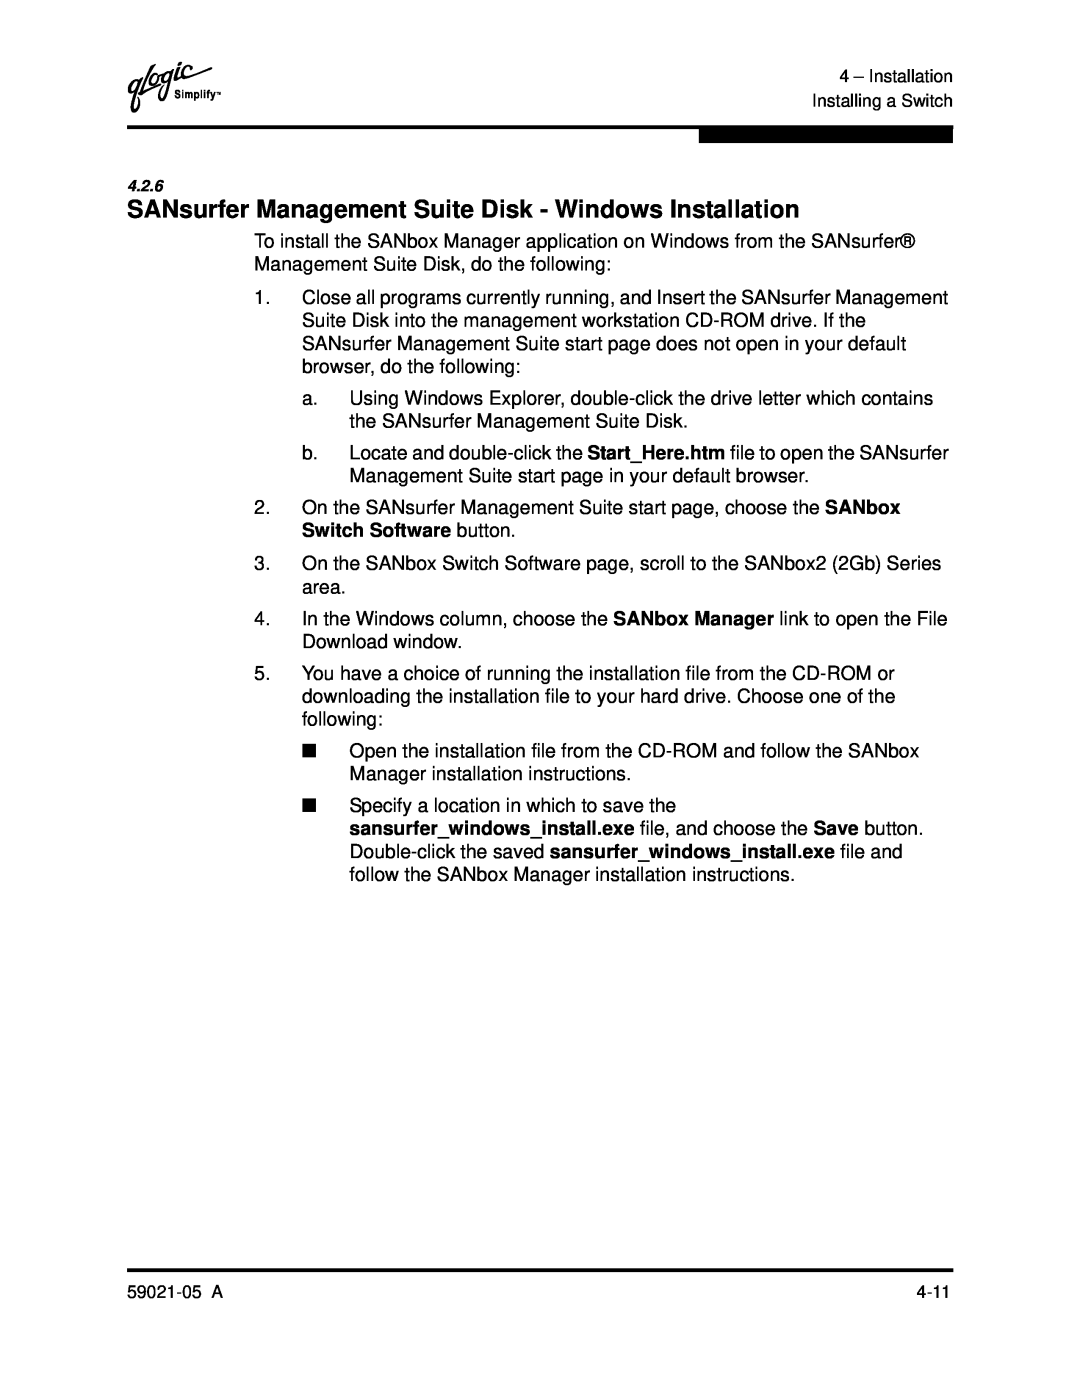 Q-Logic 59021-05 manual SANsurfer Management Suite Disk - Windows Installation 